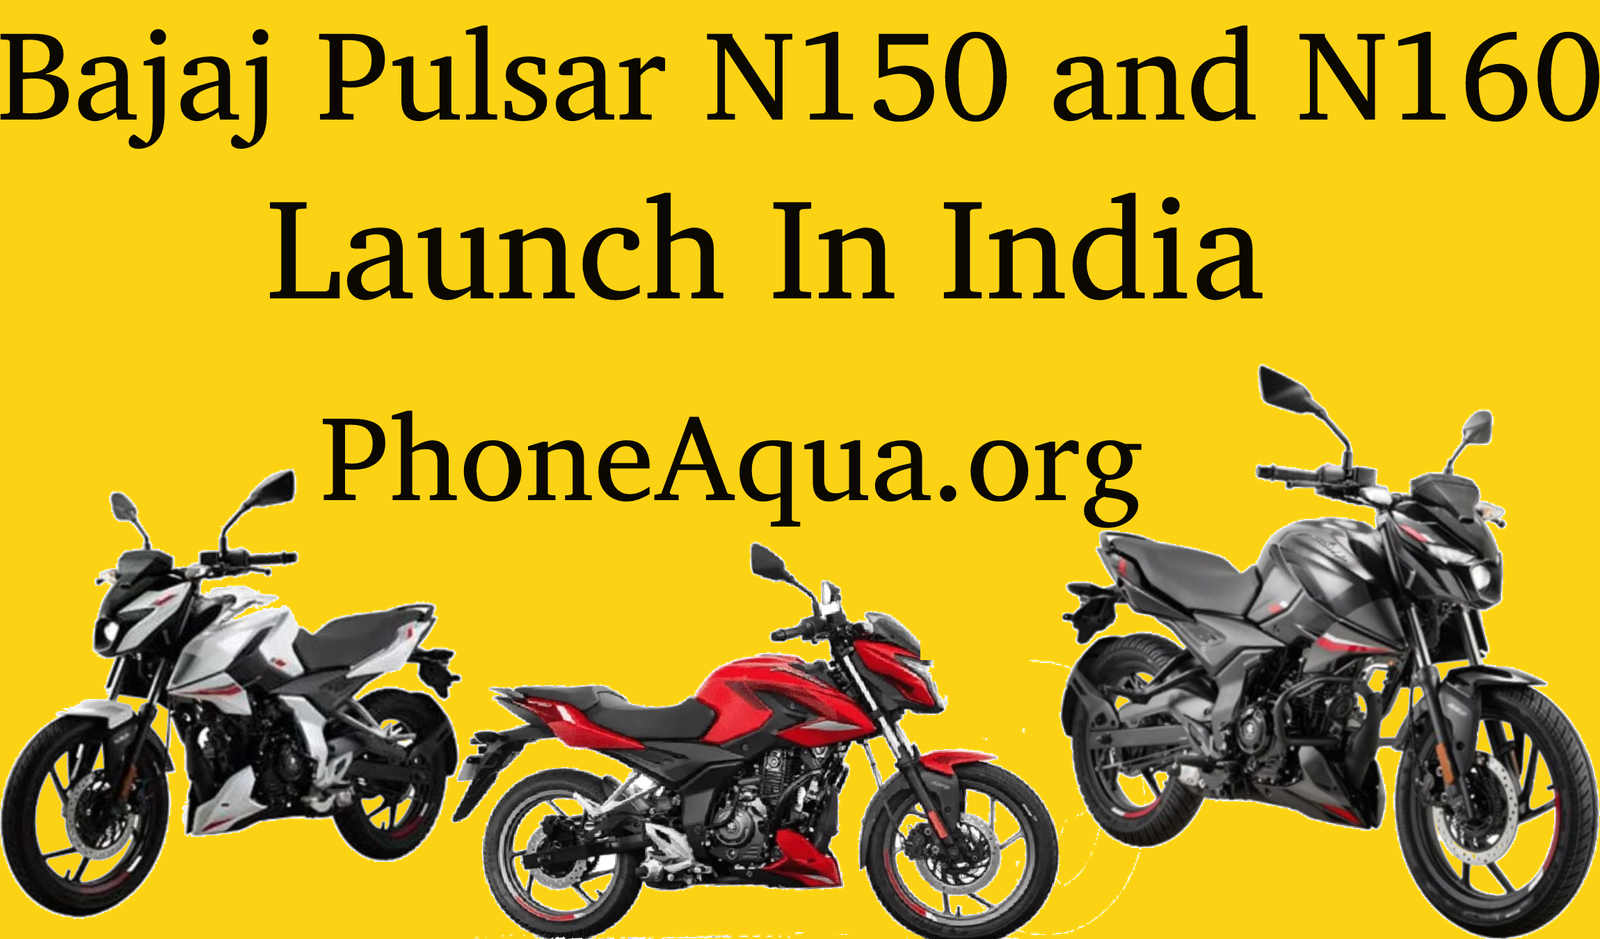 Bajaj Pulsar N150 and N160 Launch In India